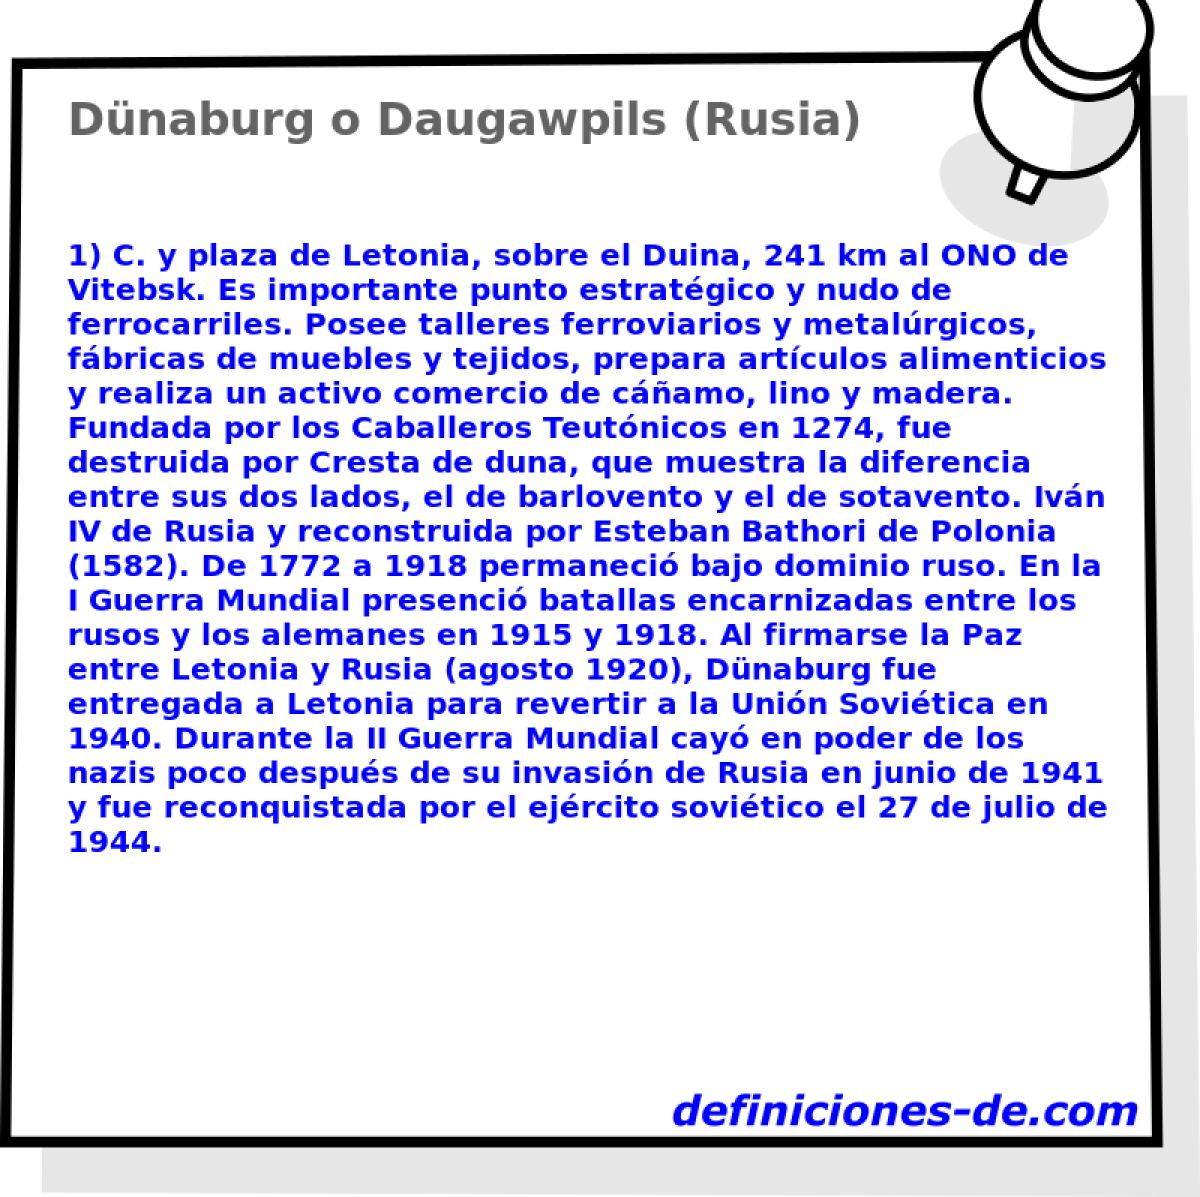 Dnaburg o Daugawpils (Rusia) 